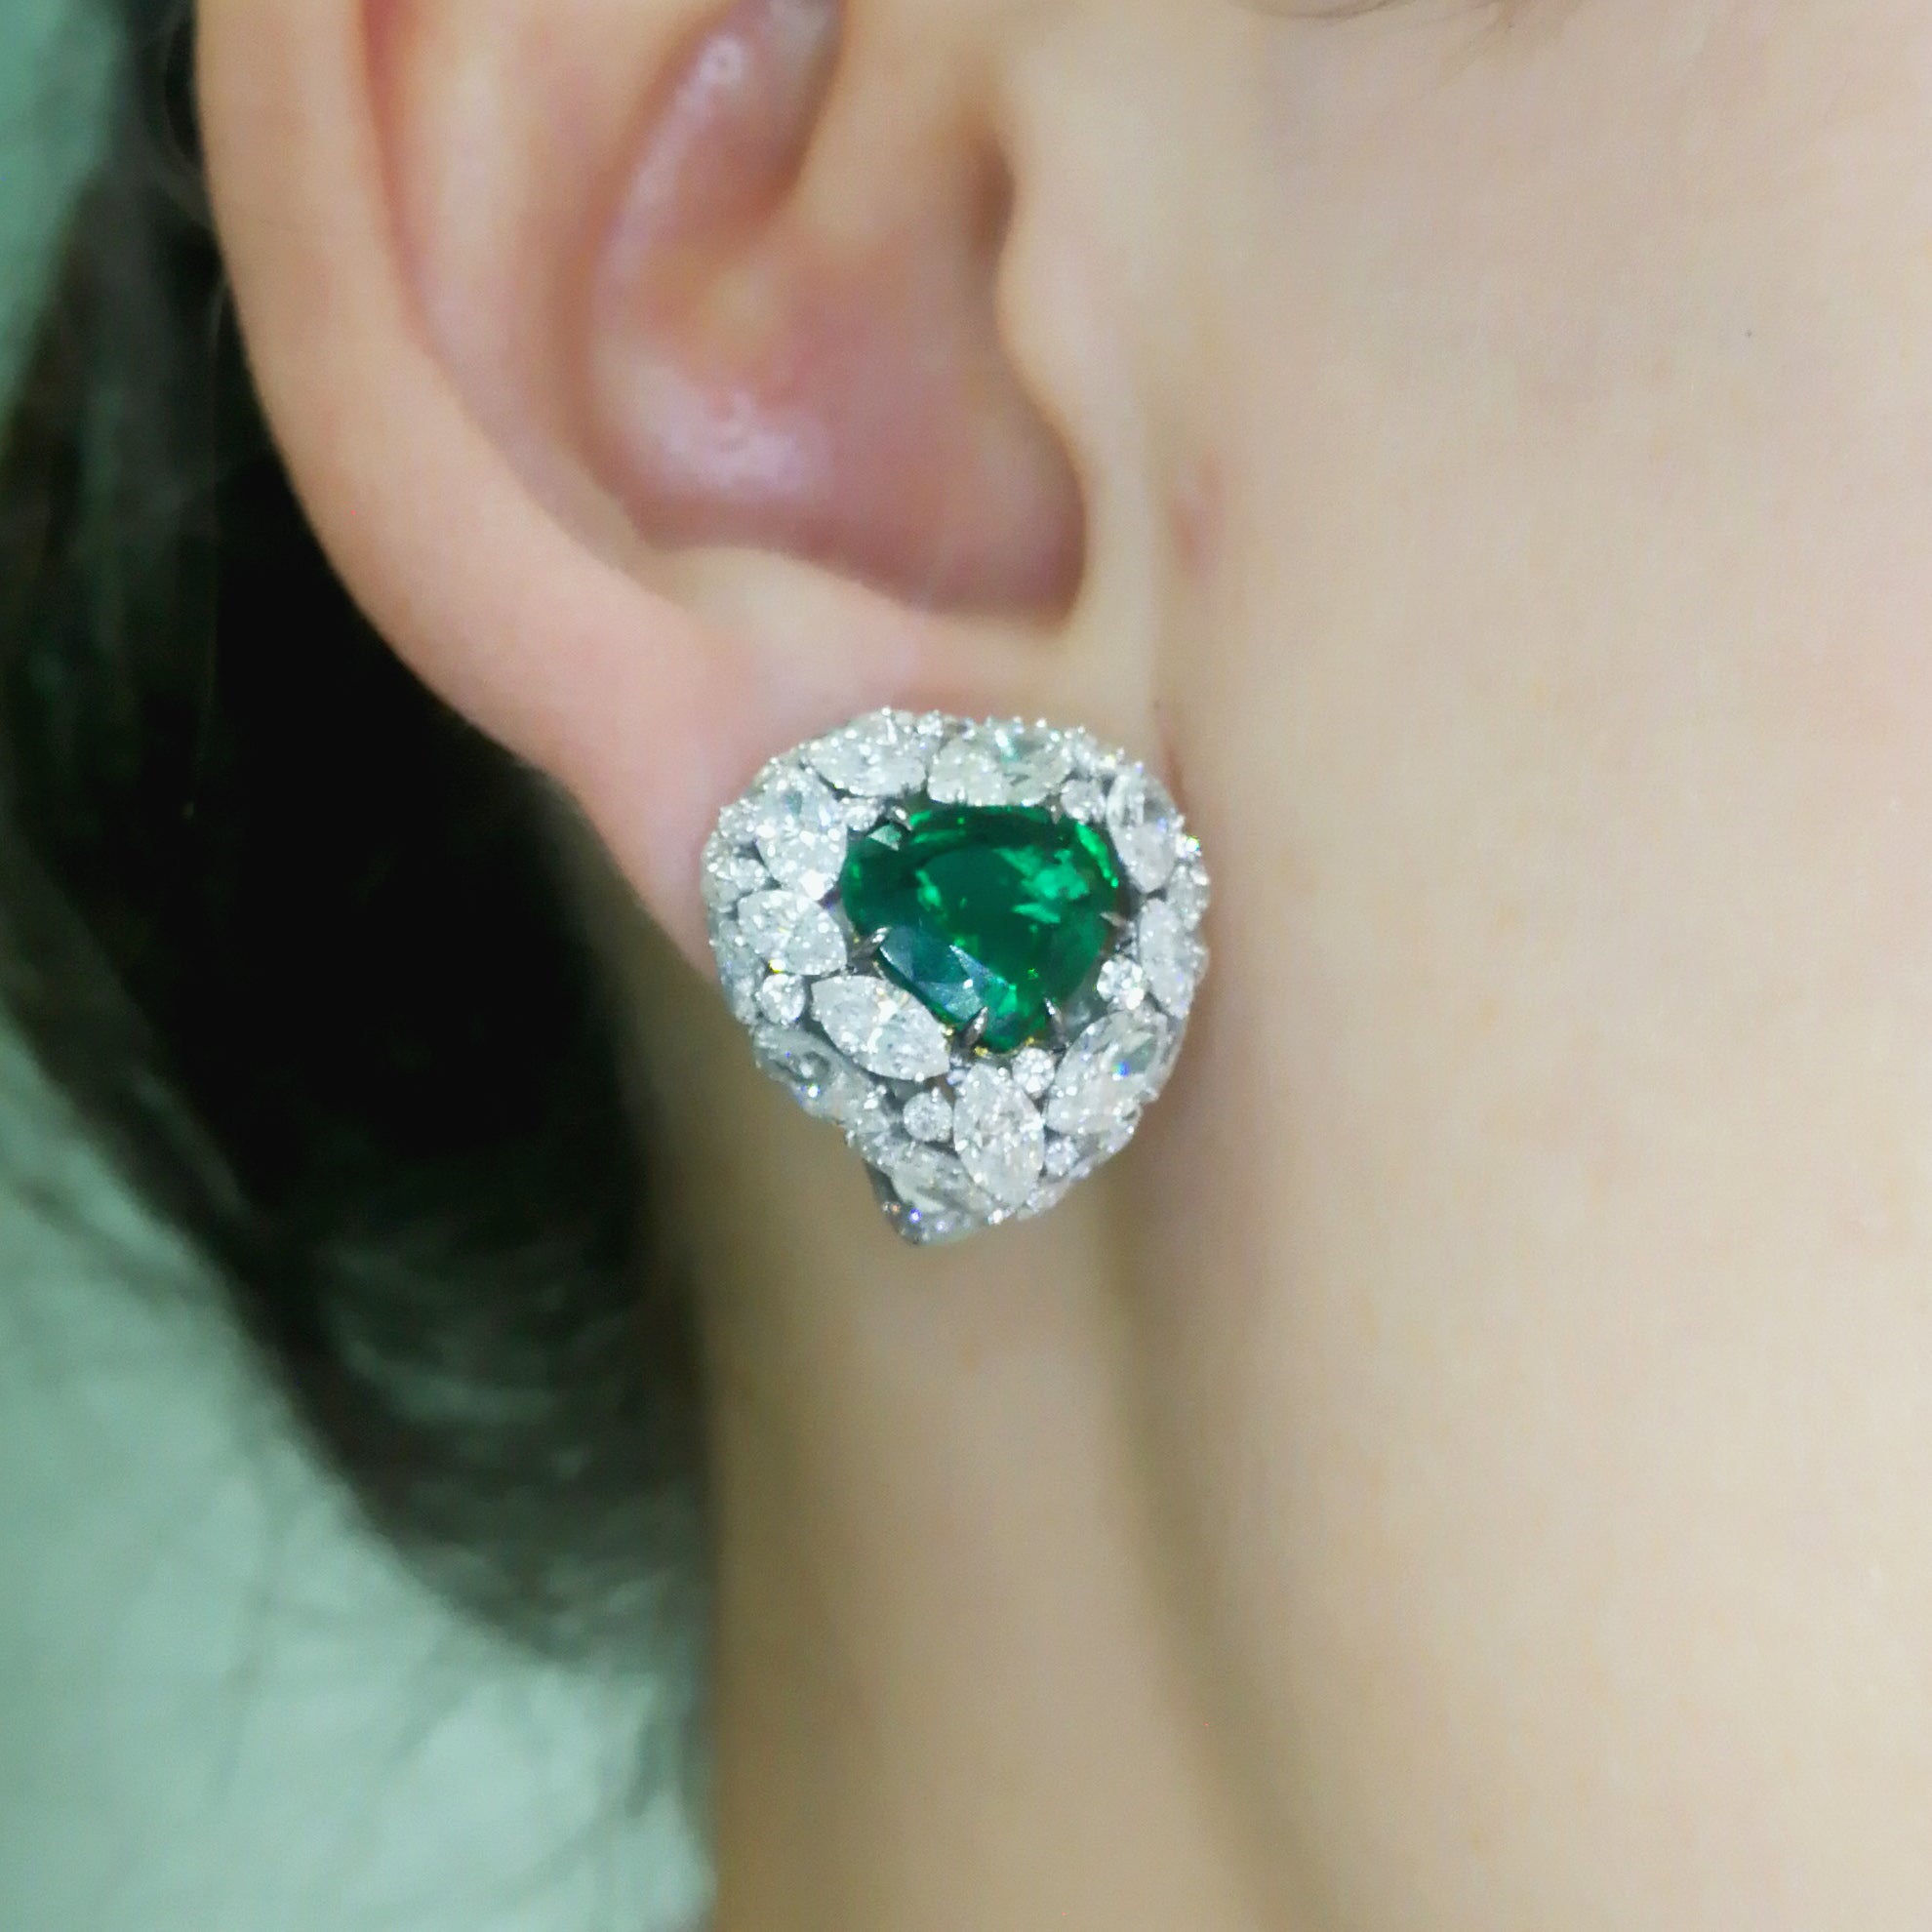 E 0114-0/1 18K White Gold, Emerald, Diamonds Earrings